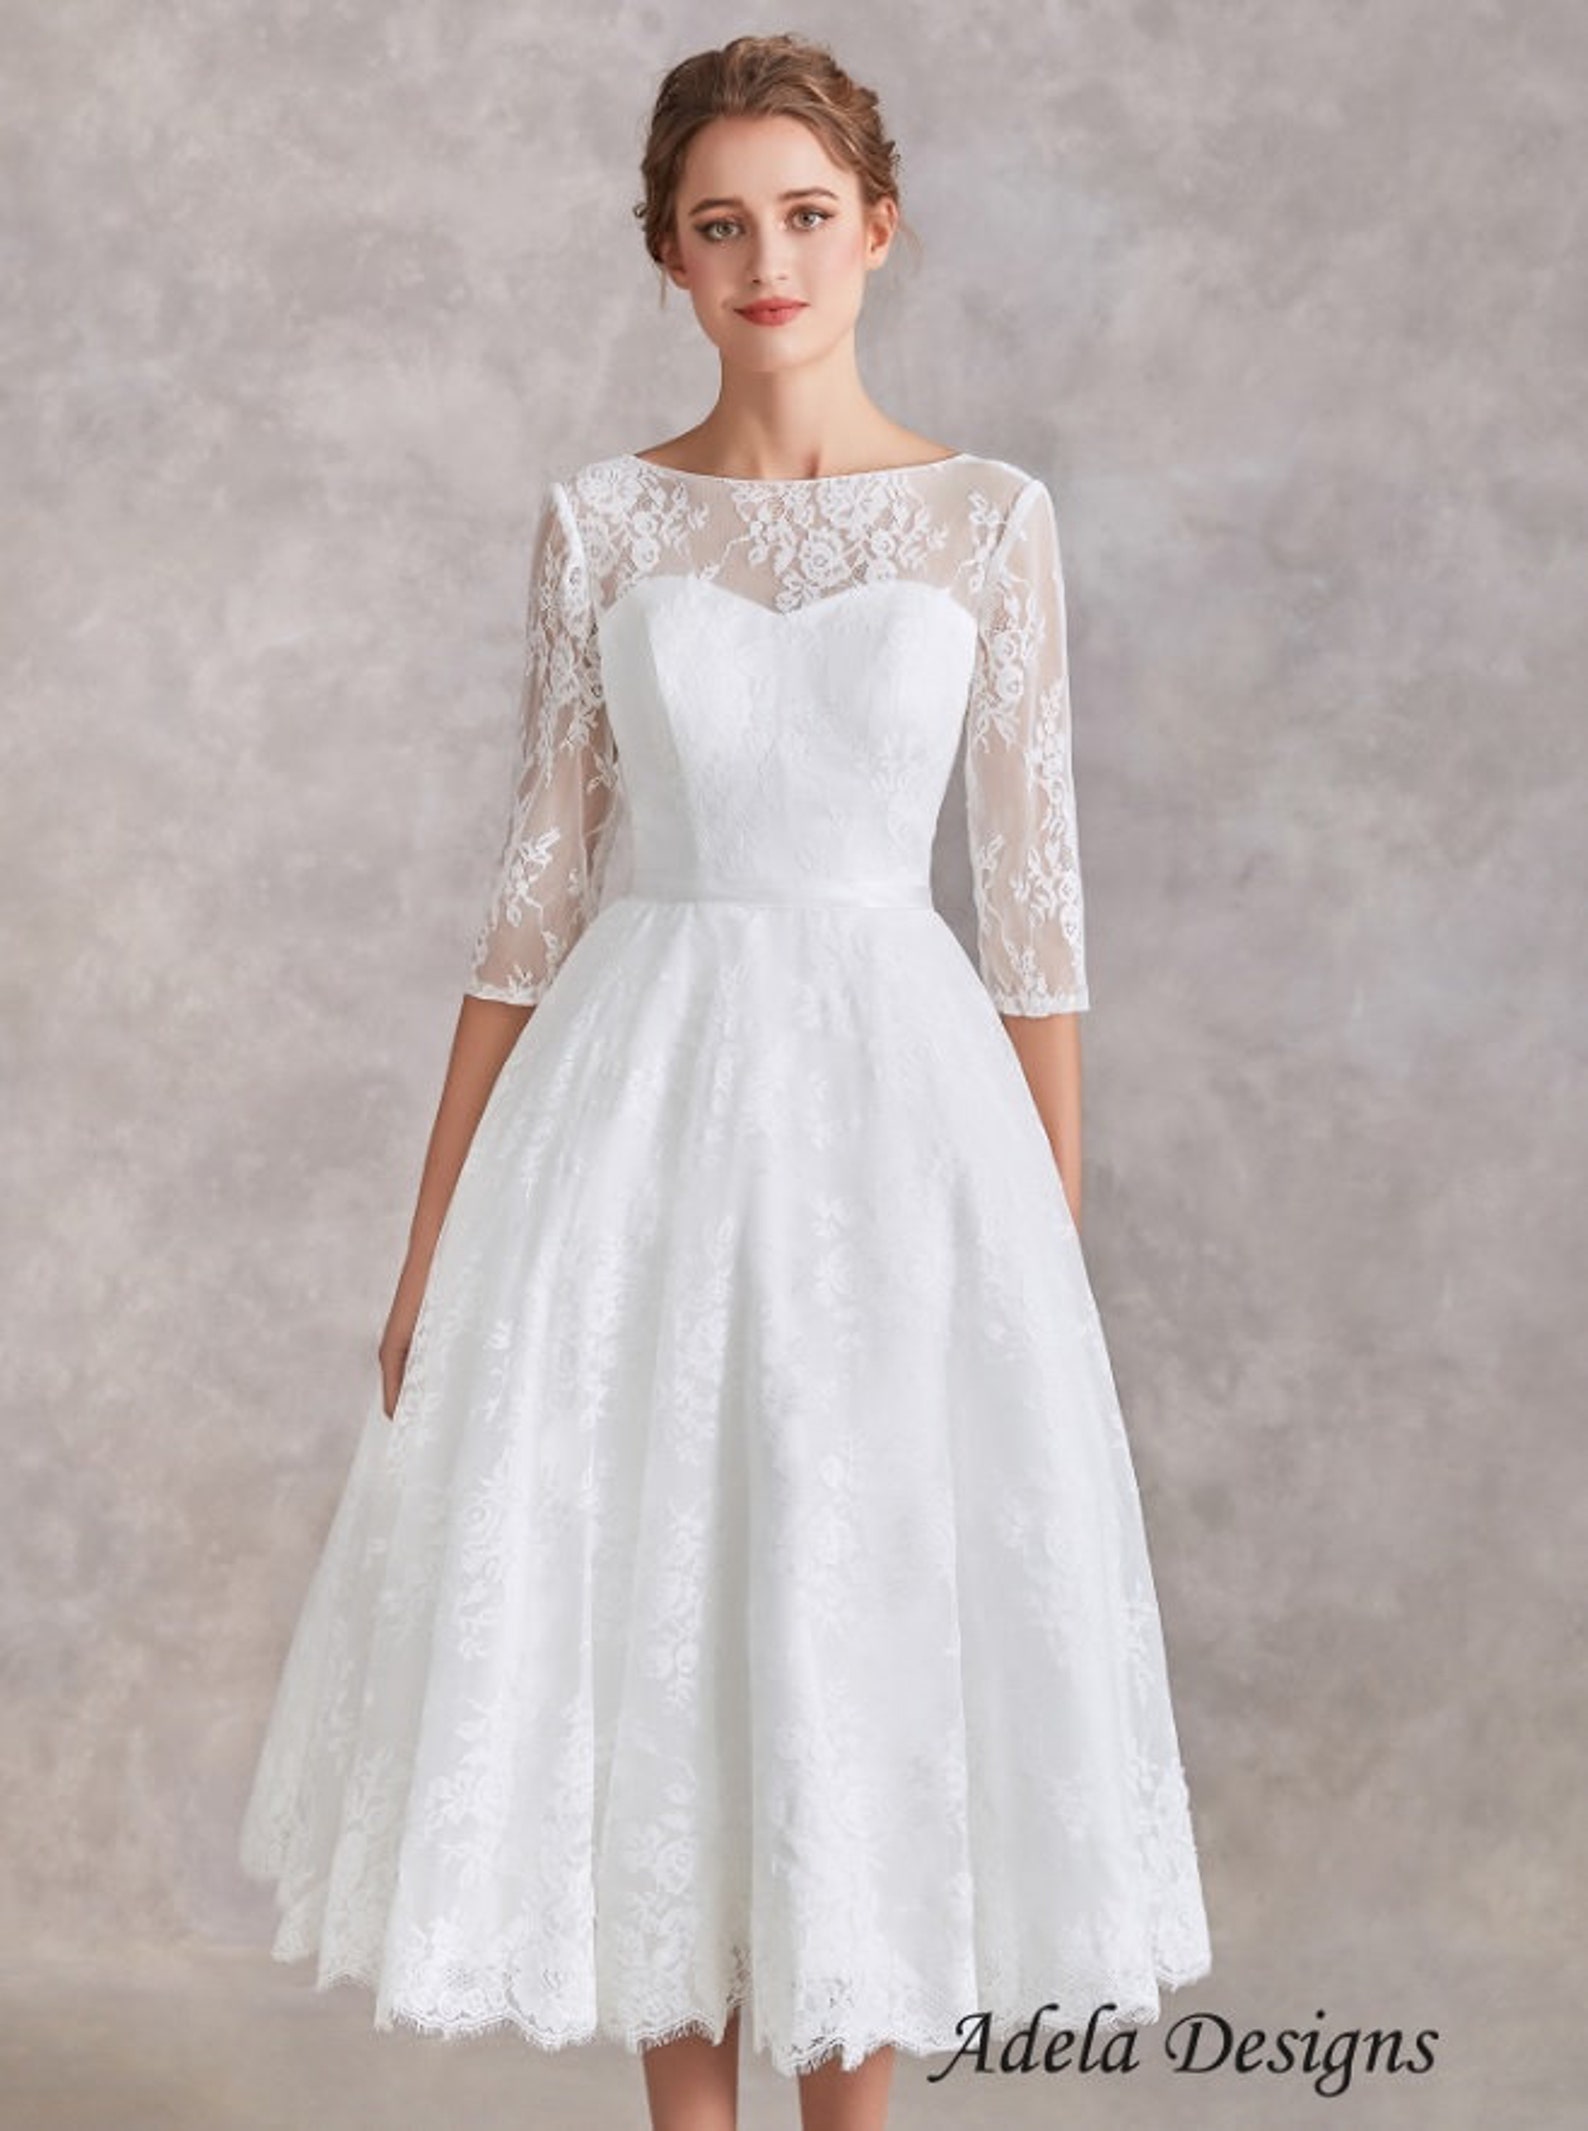 Vintage Style Tea Length Short Lace Wedding Dress Bridal Gown | Etsy